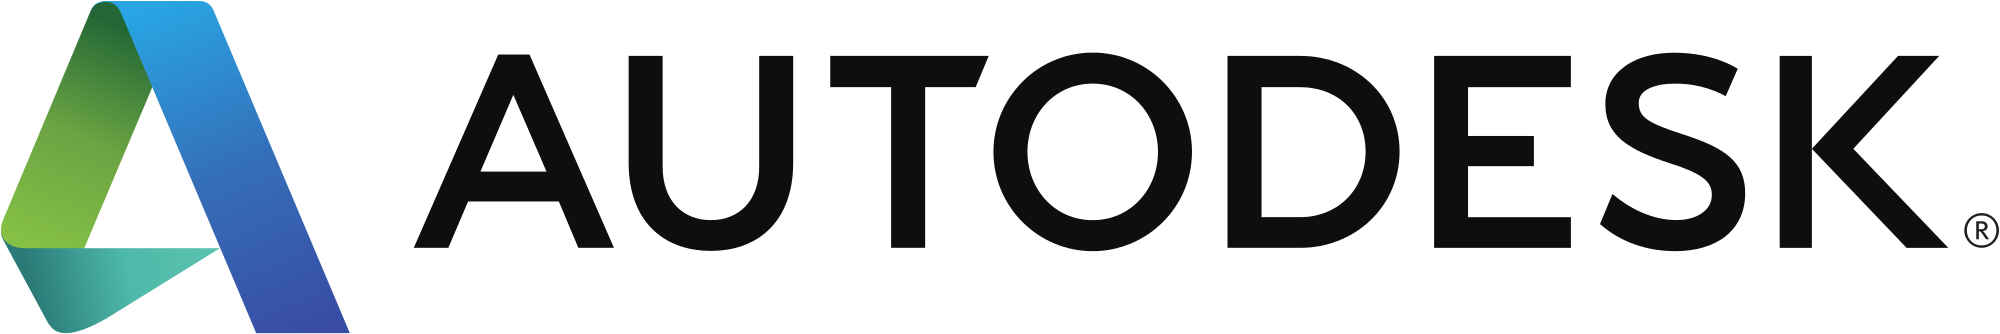 Autodesk Logo PNG - 35462